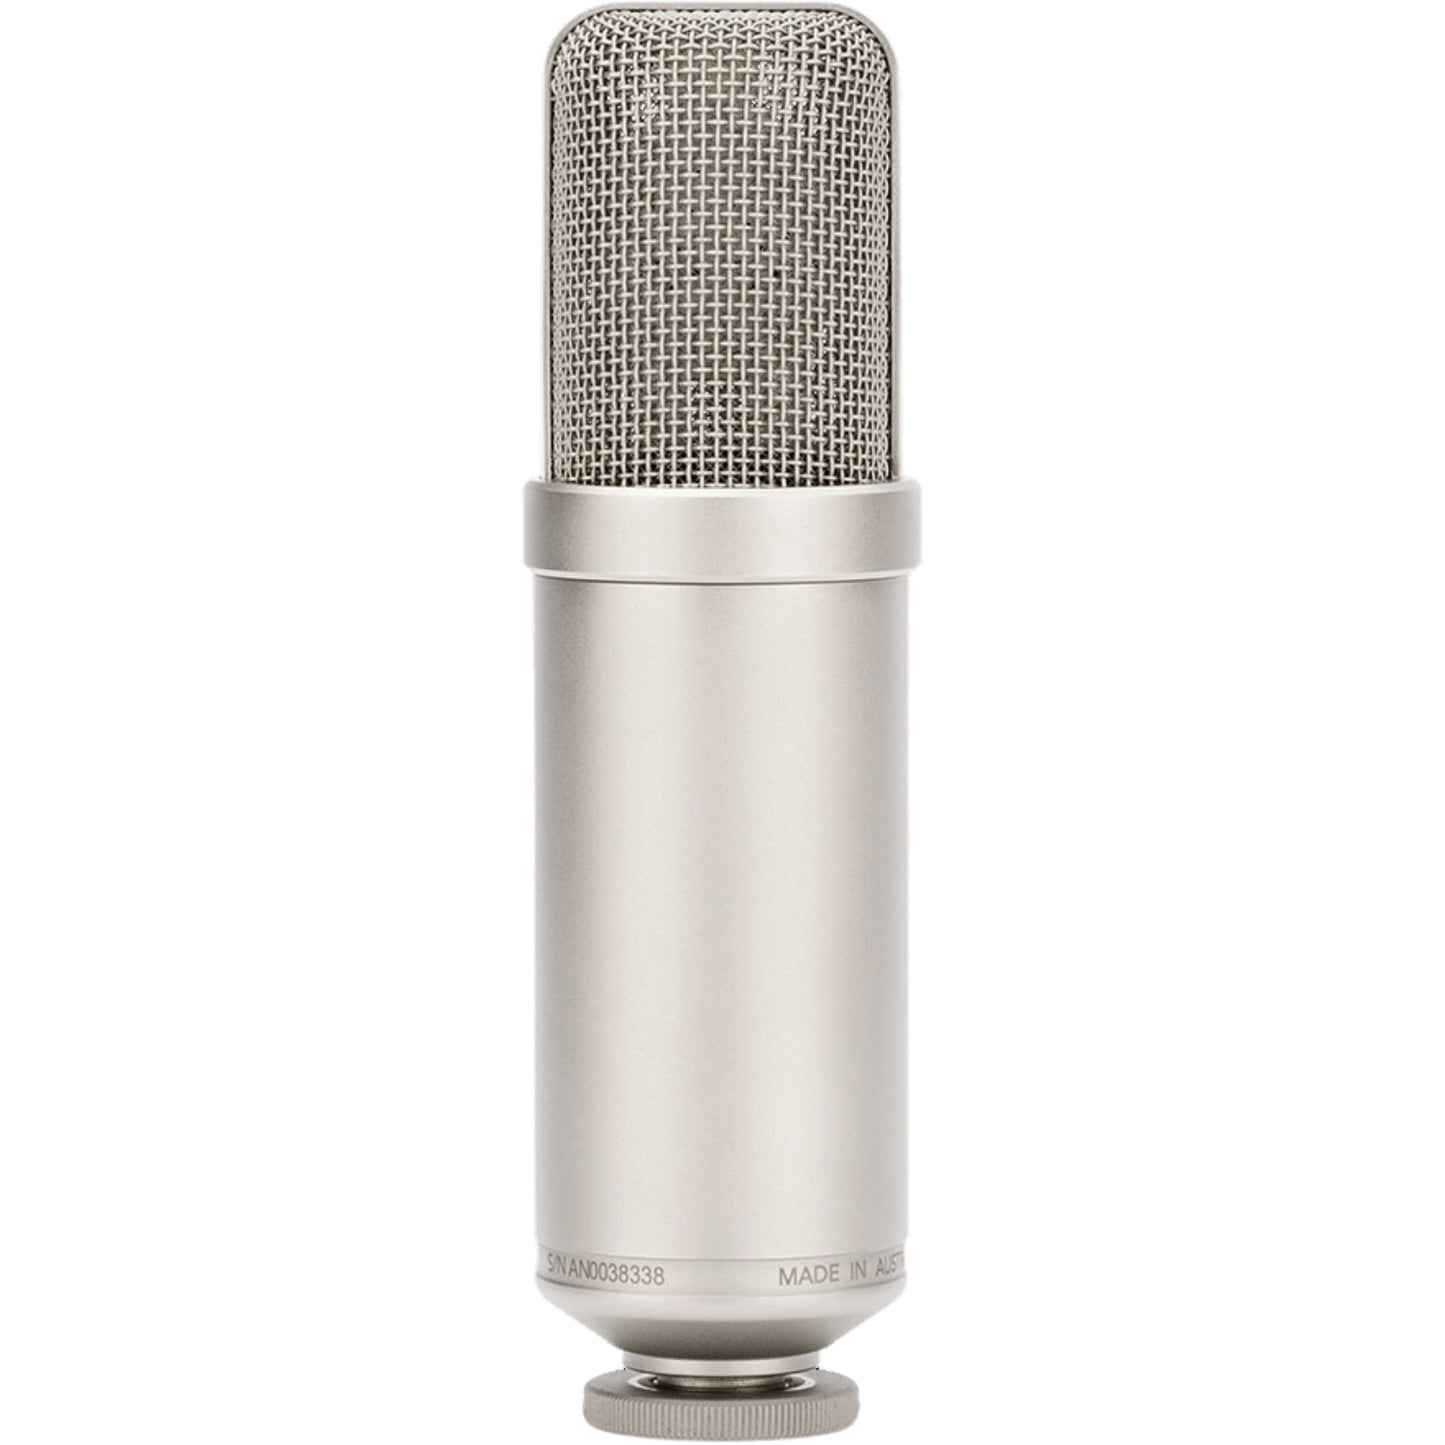 Rode NTK Valve 1 Condenser Microphone - MyMobile